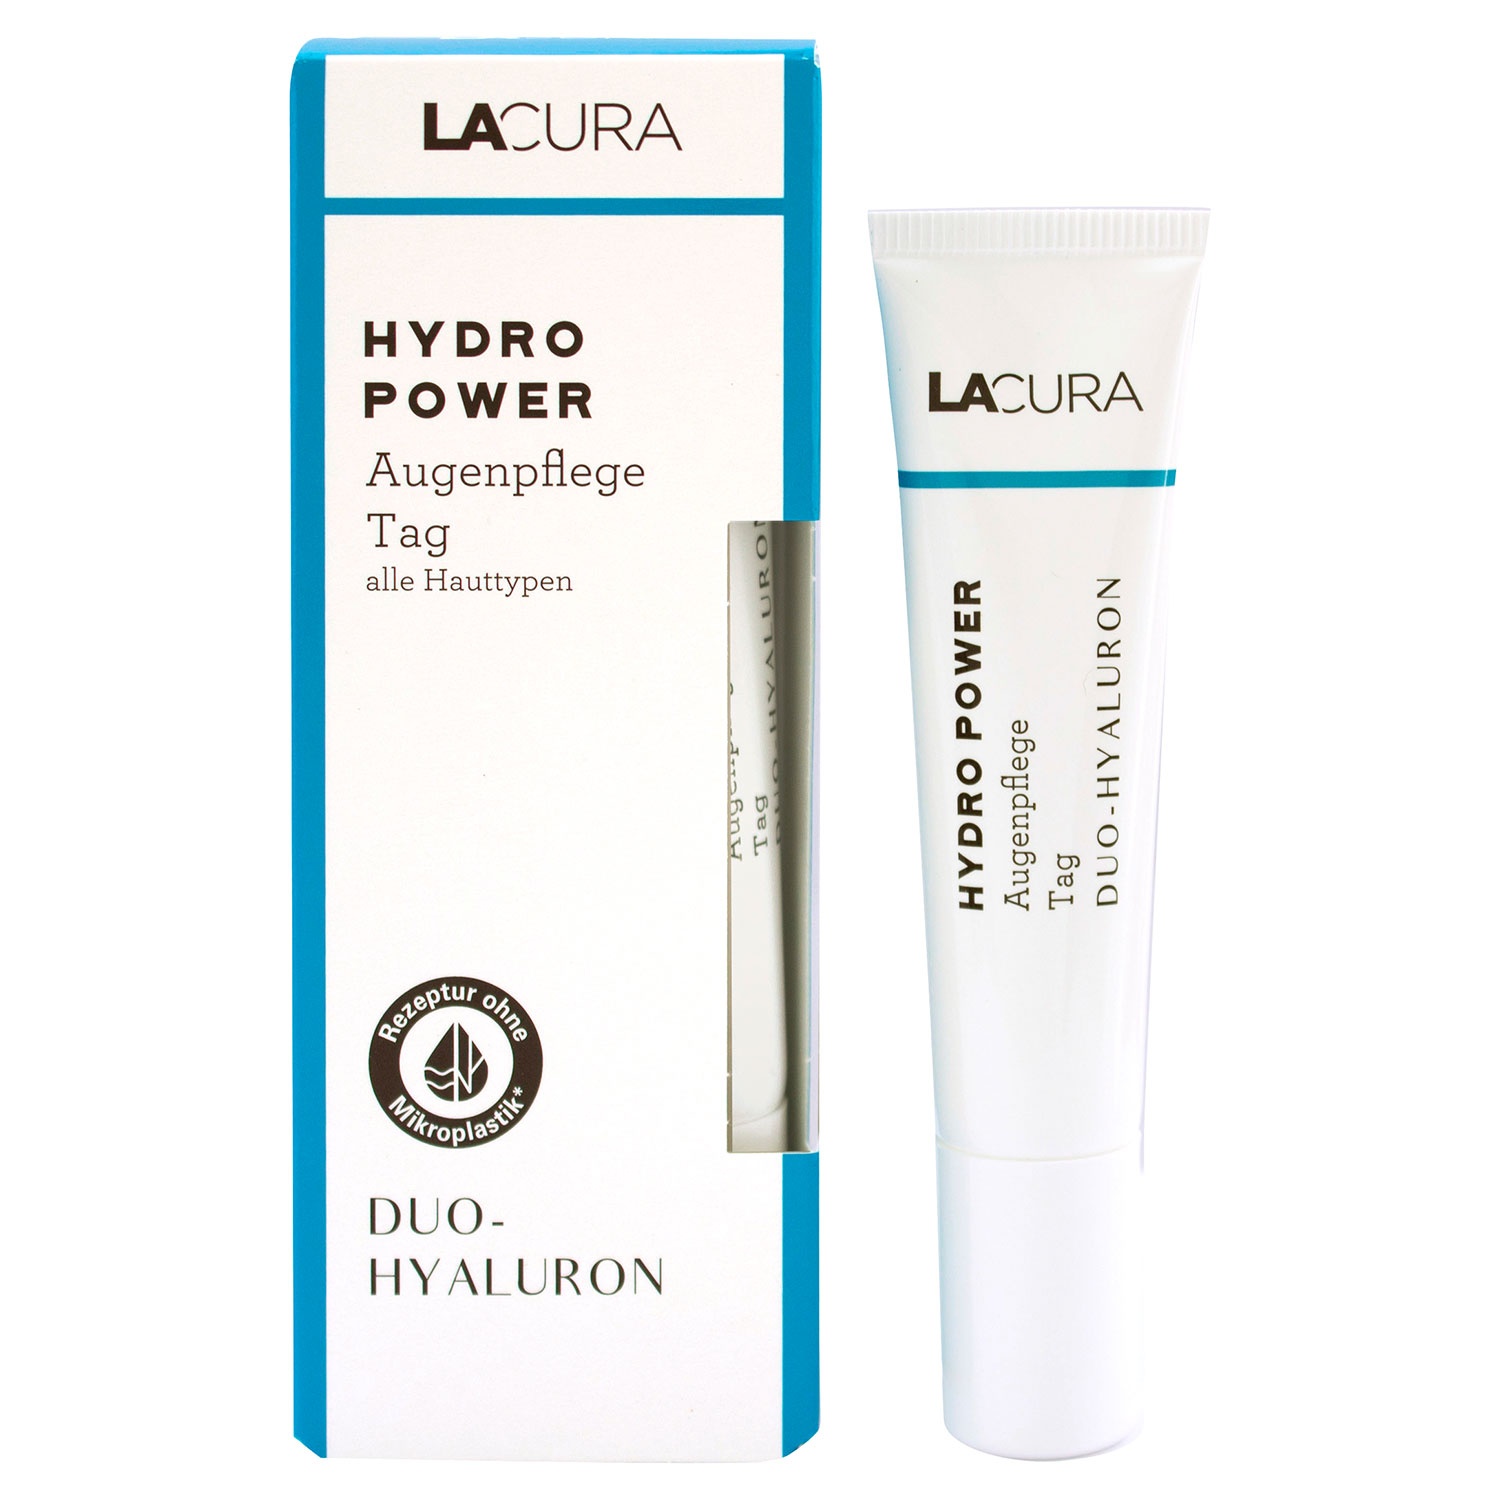 LACURA Hydro-Power-Augenpflege mit Duo-Hyaluron 15 ml